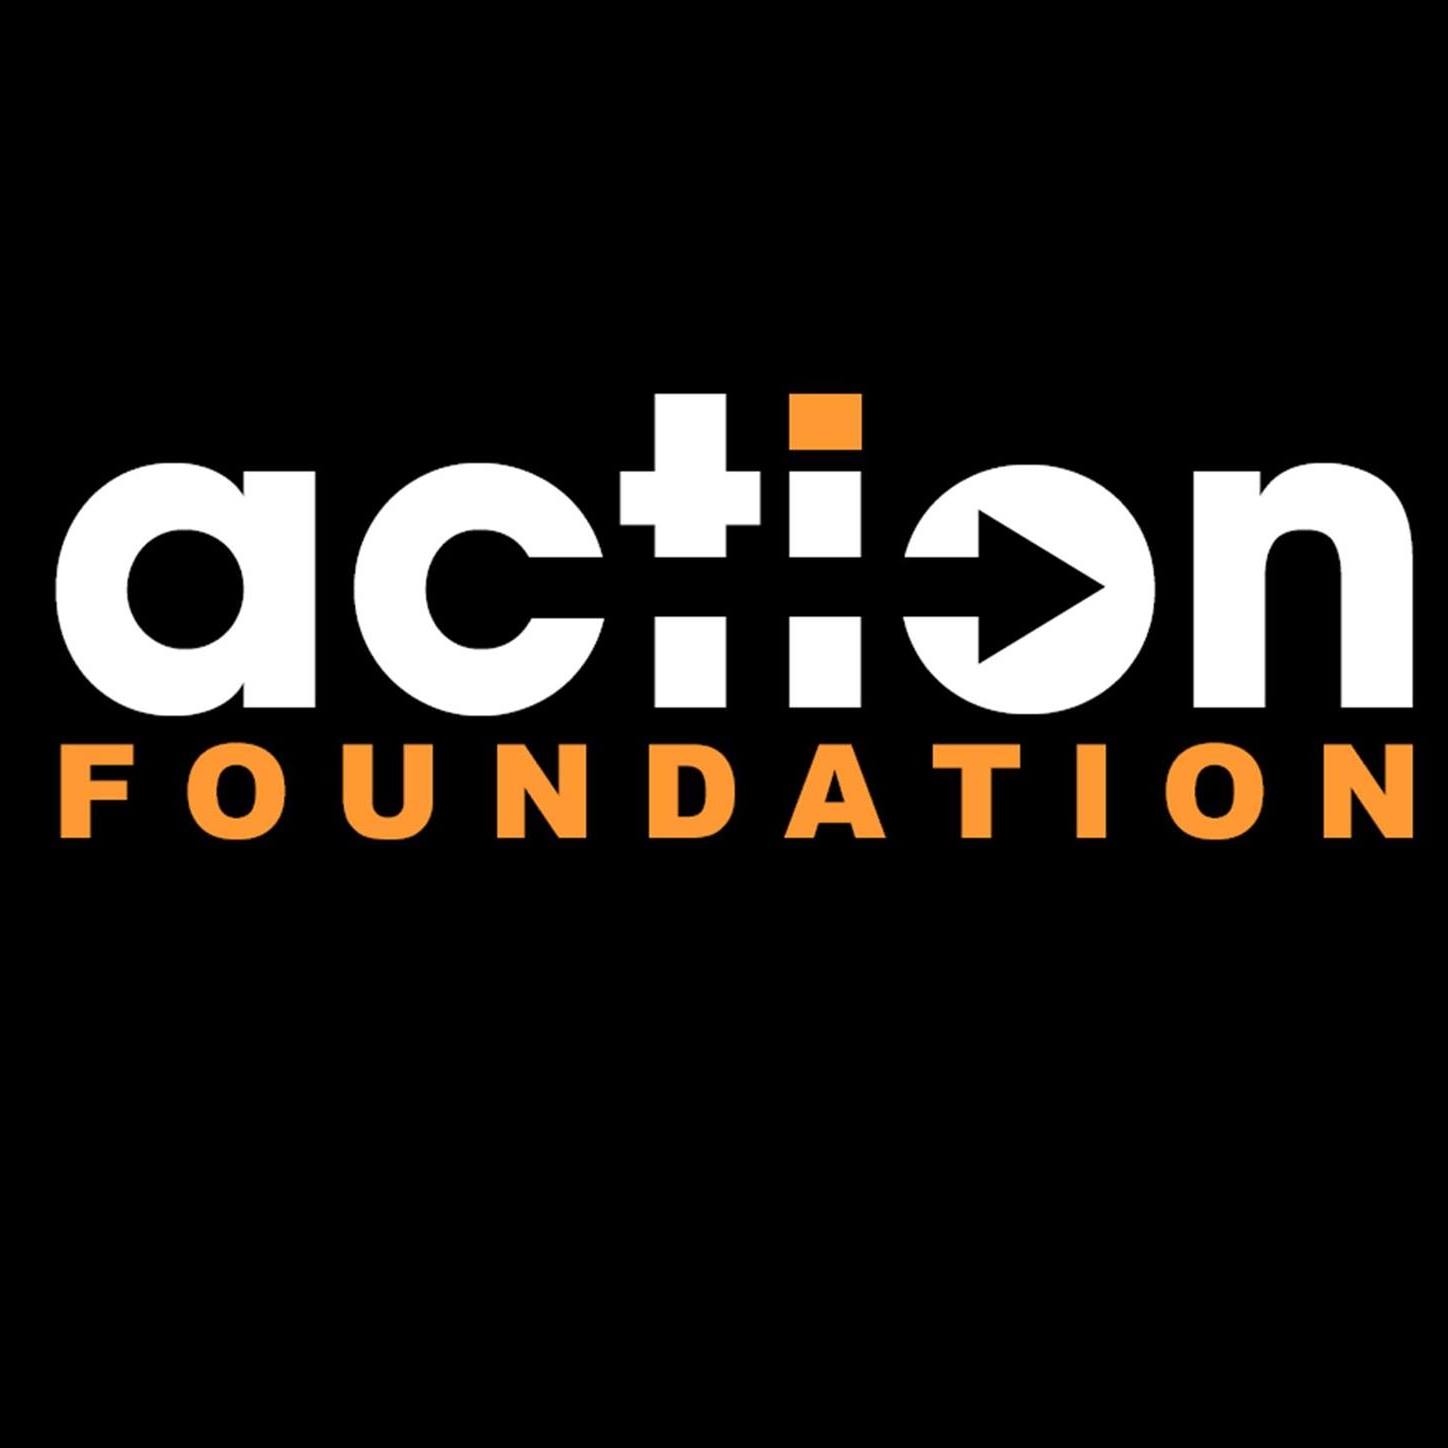 Action Foundation